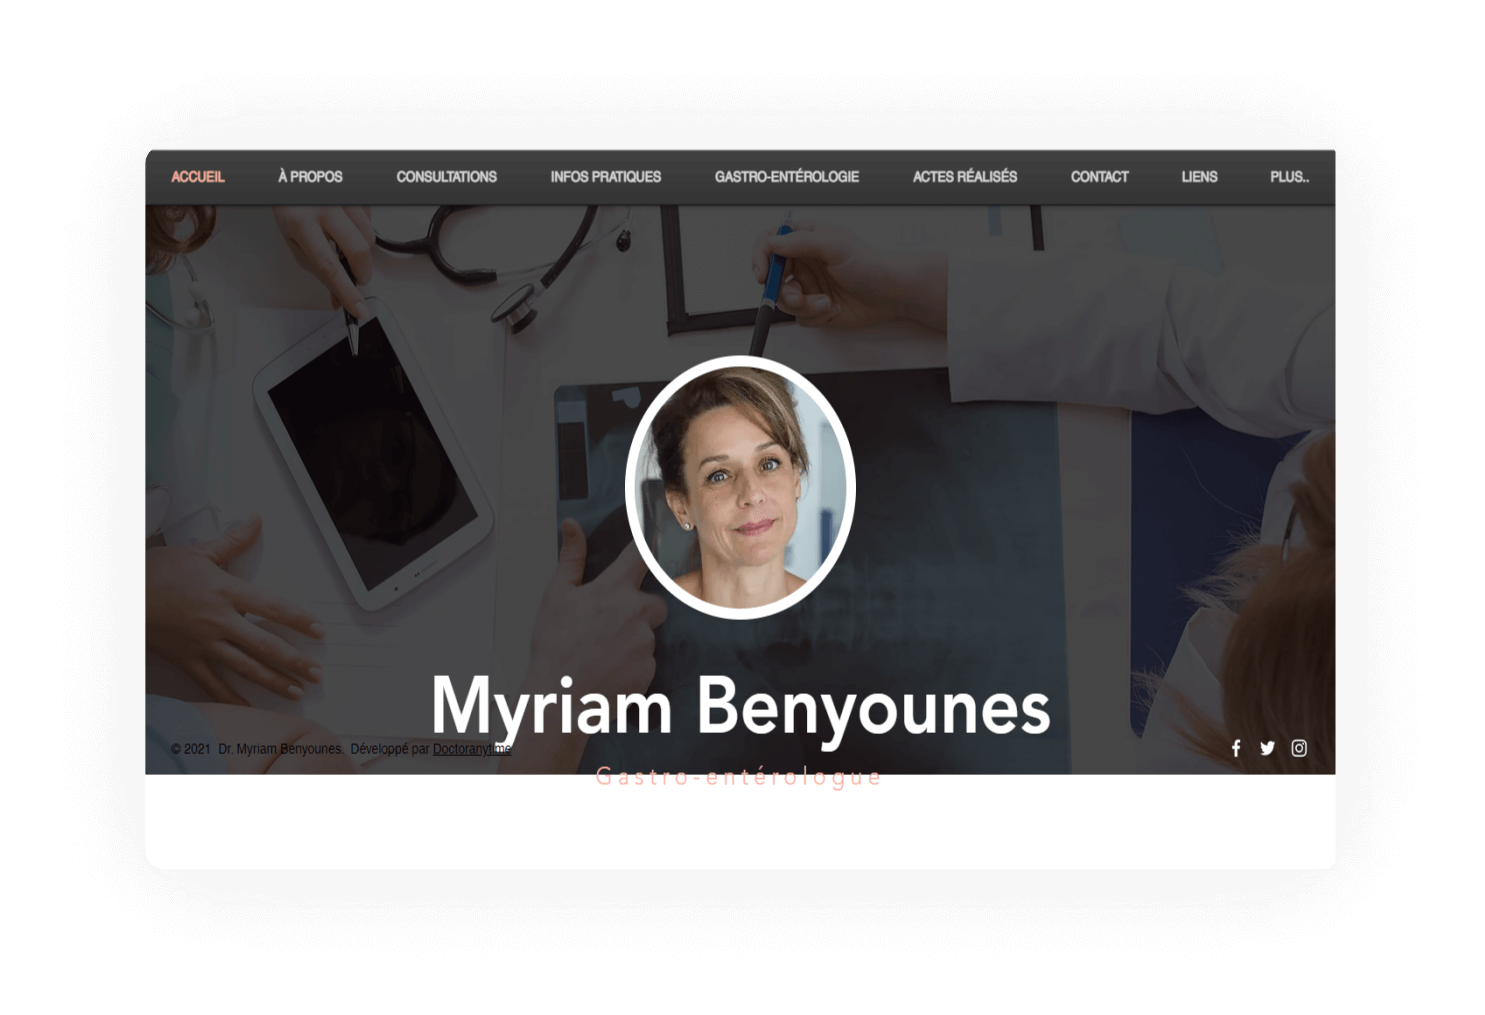 Myriam Benyounes